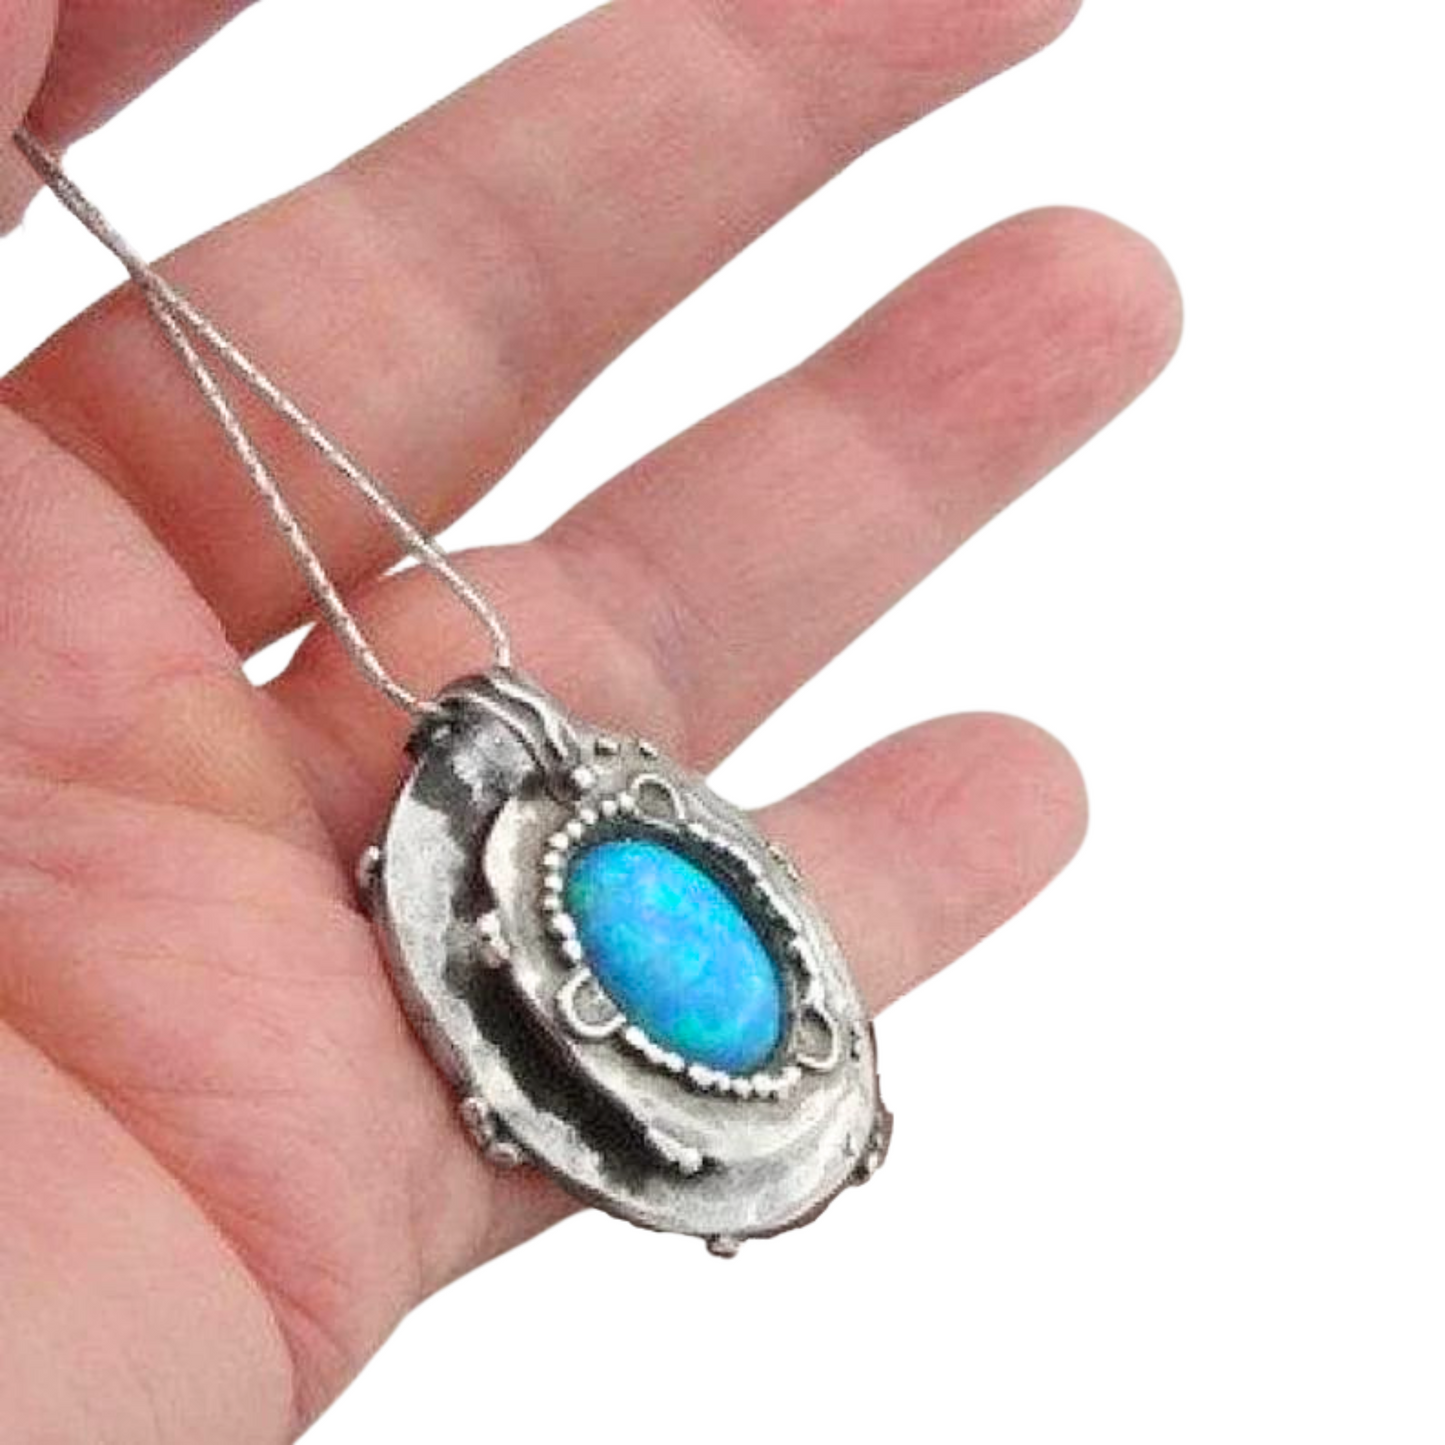 Opal Pendant, Oval Sterling Silver Pendant, Blue Pendant, Unisex Pendant, Israeli Jewelry